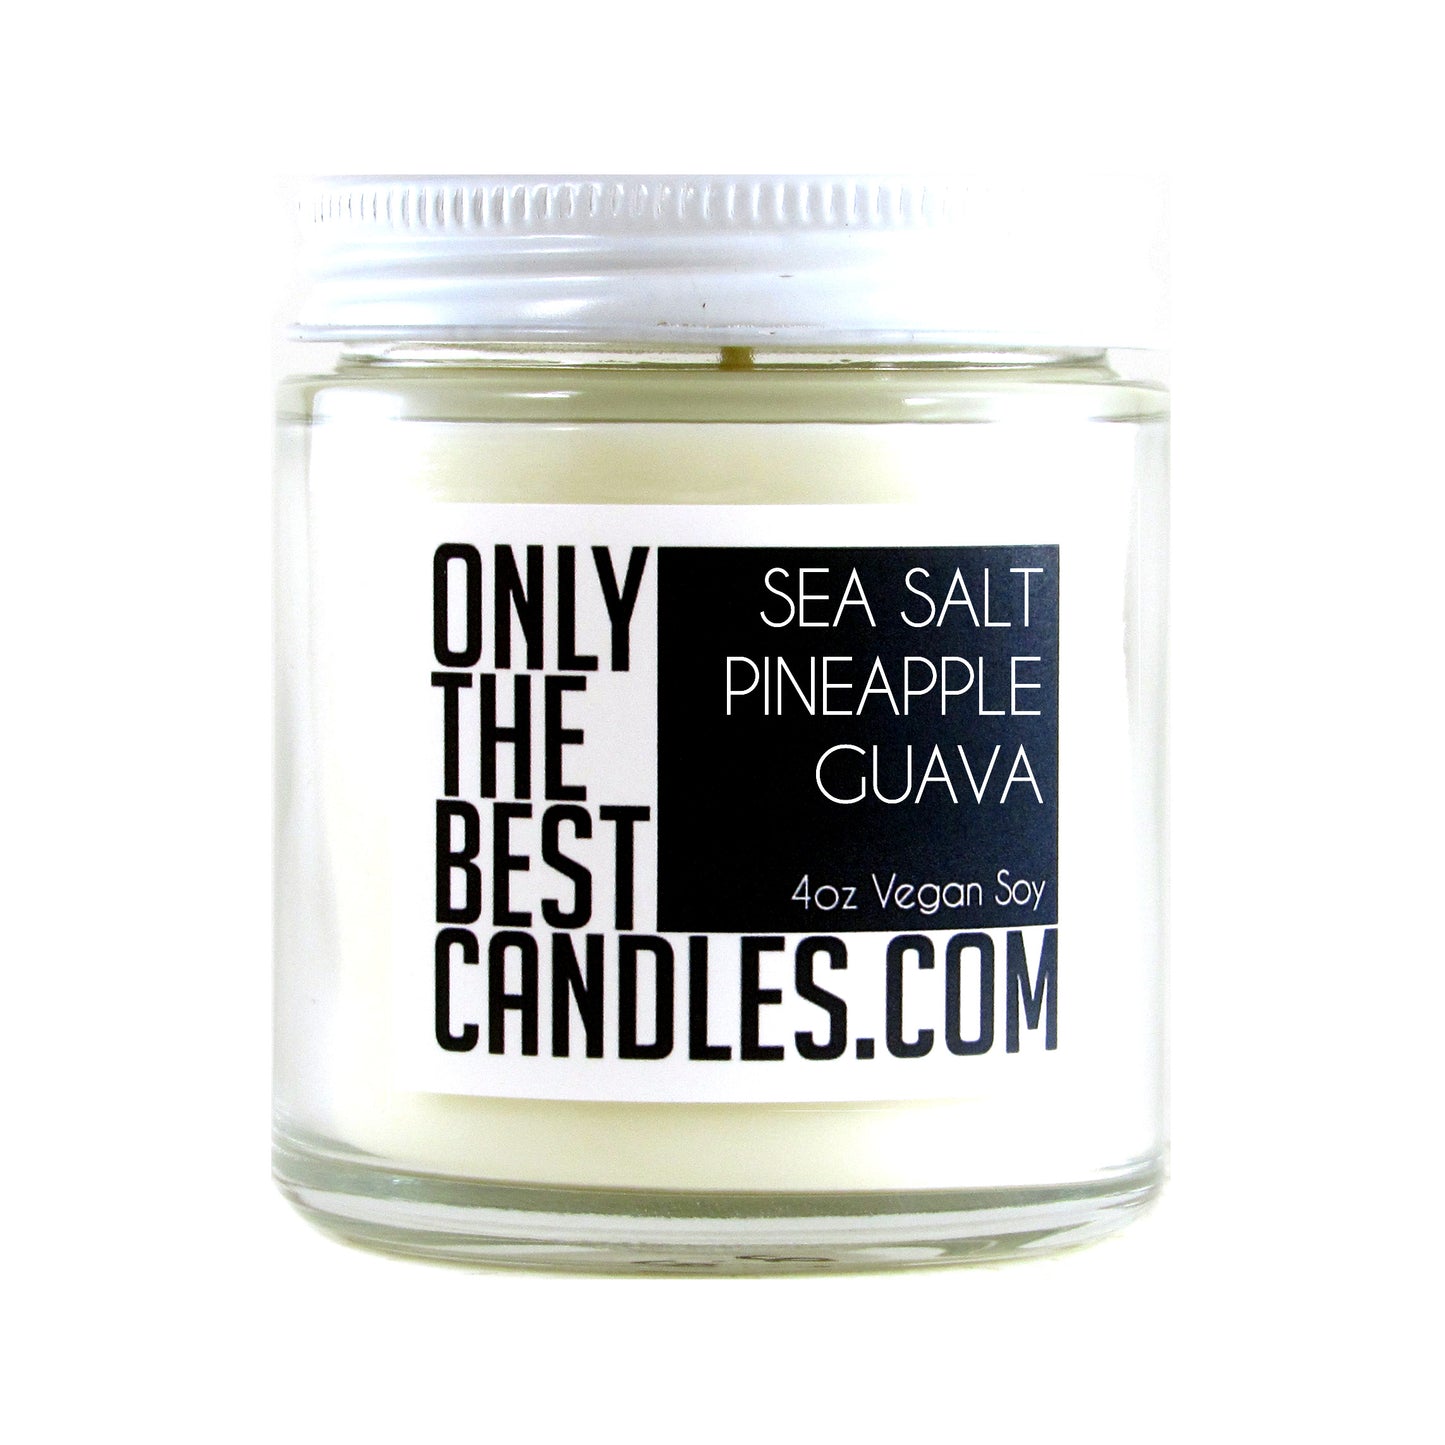 Sea Salt Pineapple Guava 4oz Candle